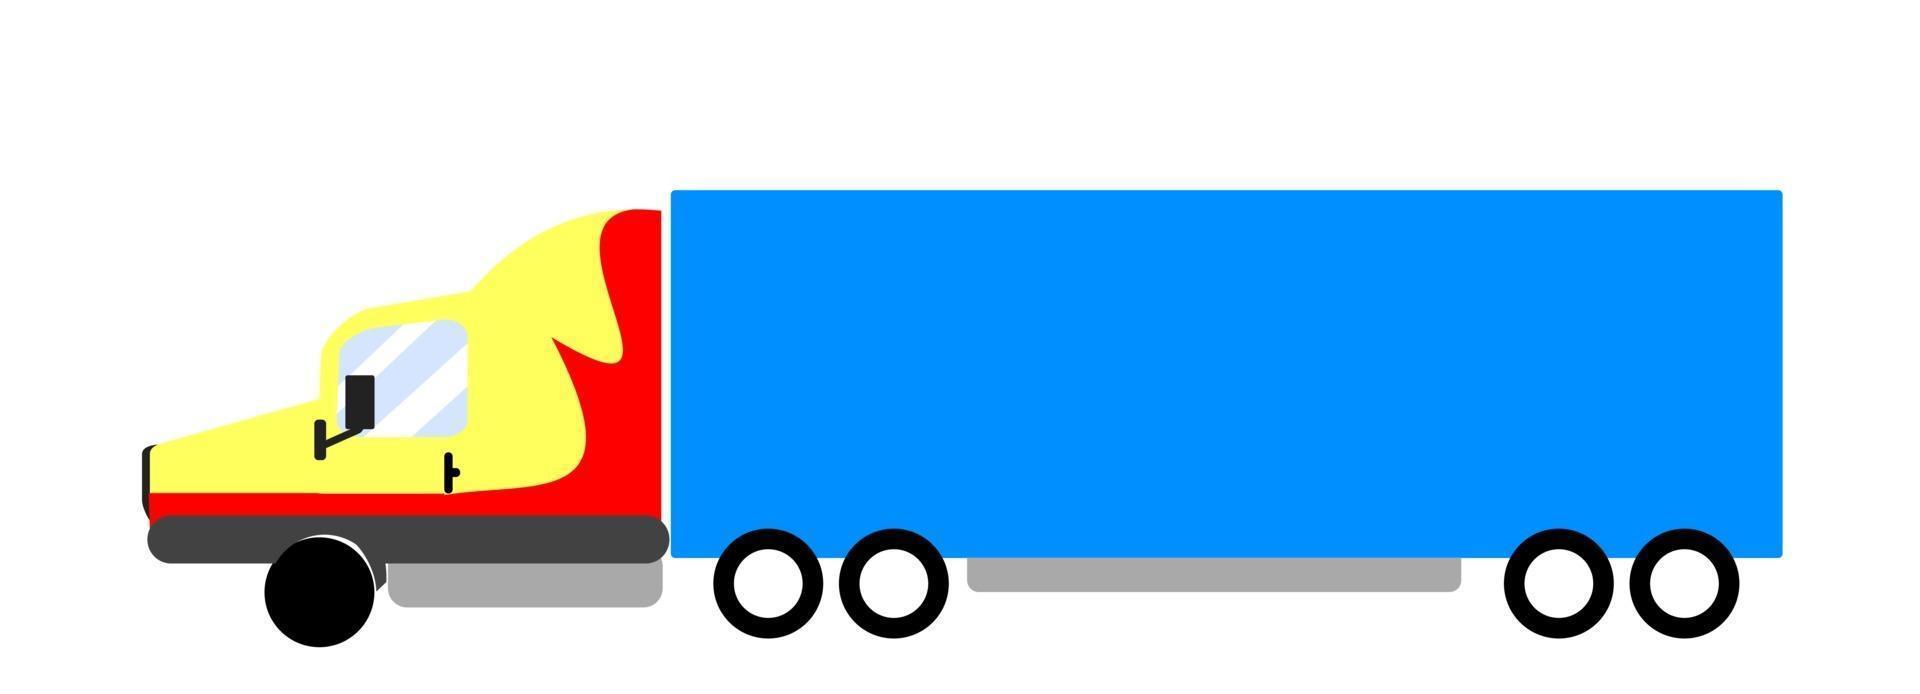 Cartoon truck. Truck vector